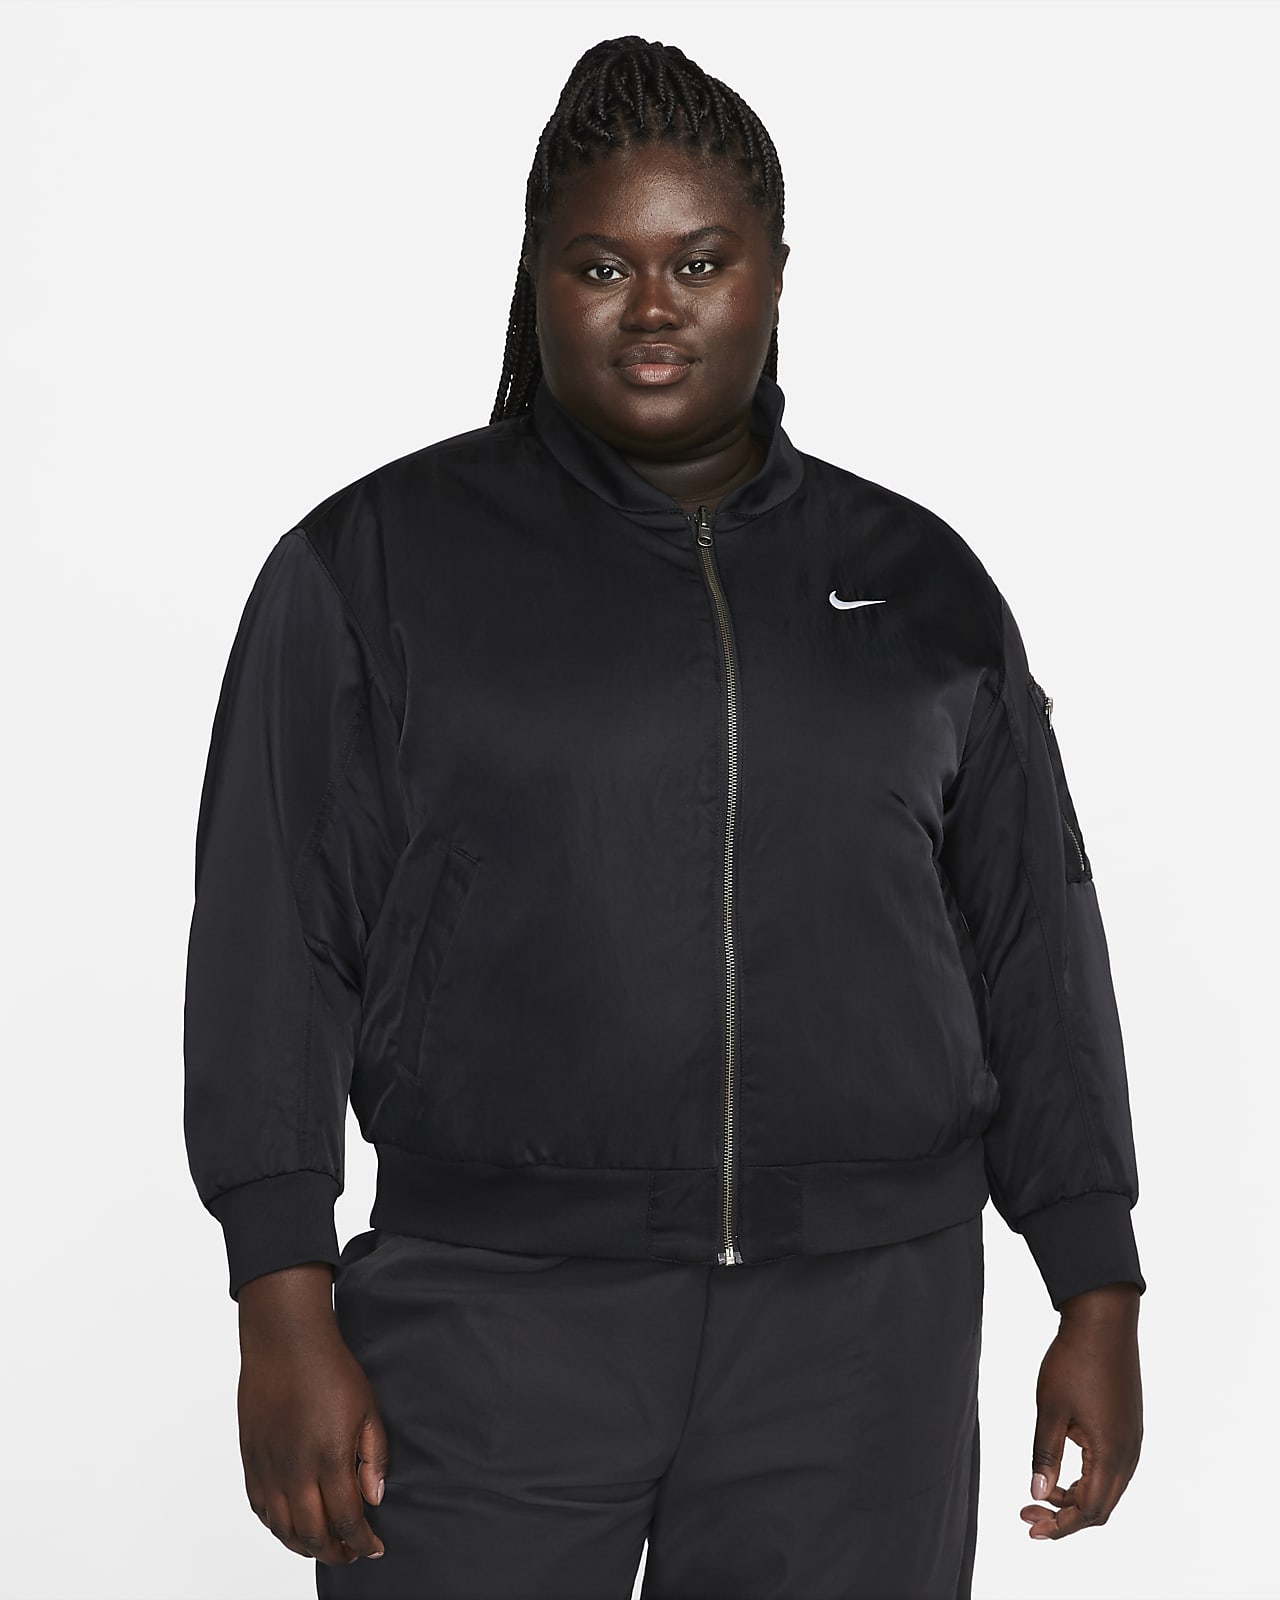 Nike Sportswear vendbar bomberjakke i collegestil til dame (Plus Size)